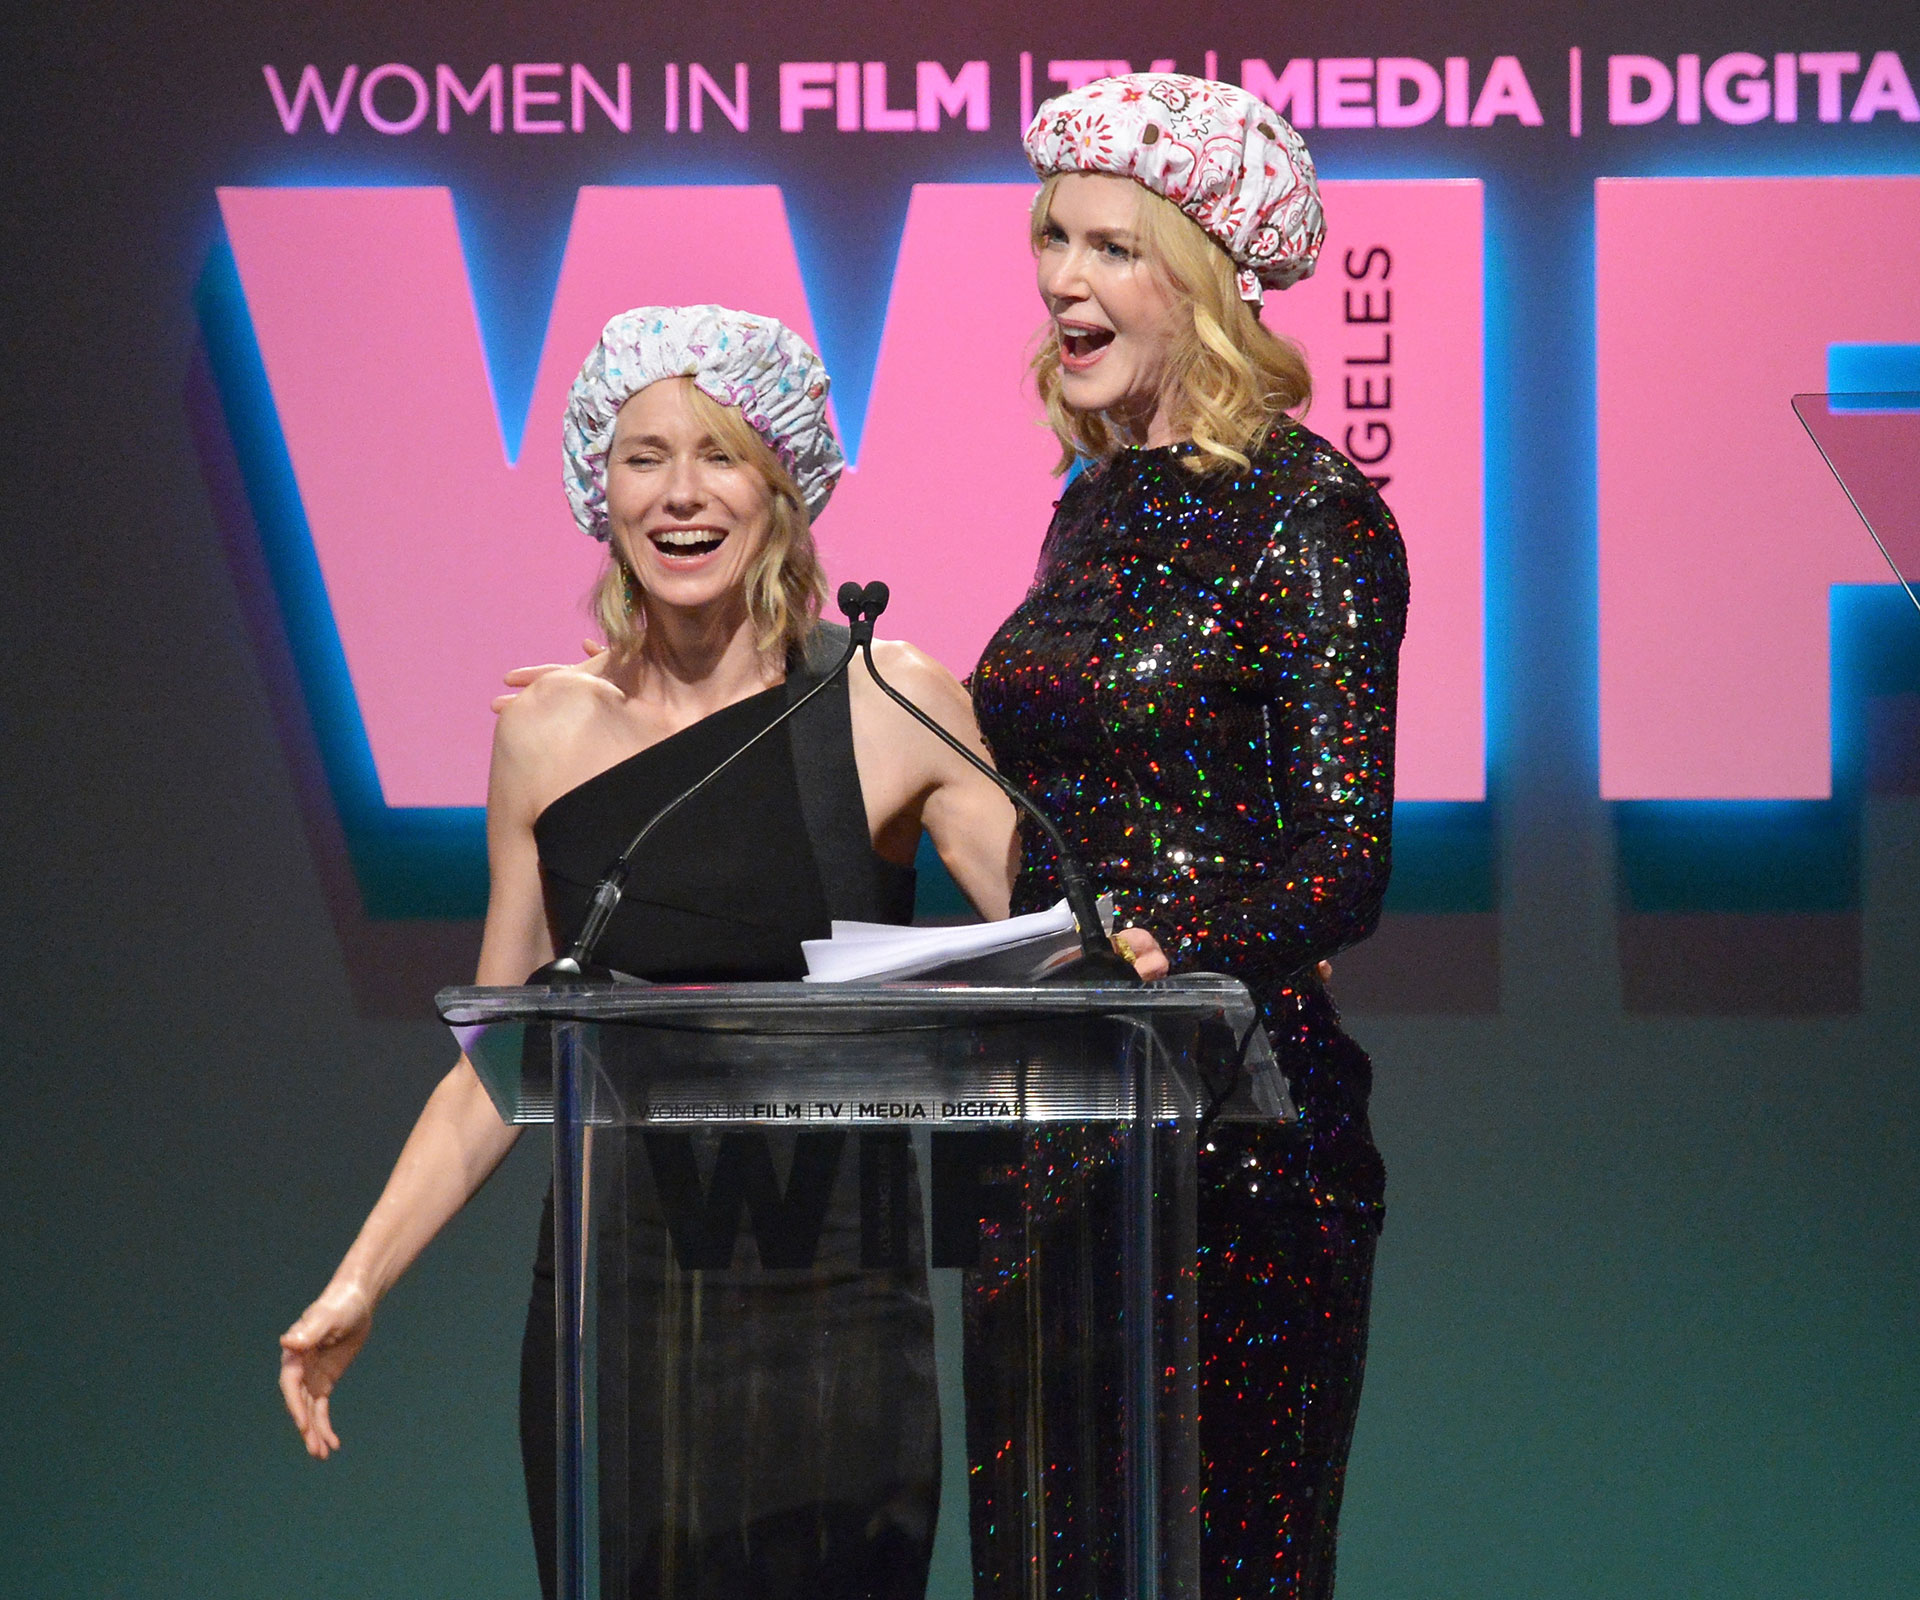 Nicole Kidman and Naomi Watts and the Women in Film Awards 